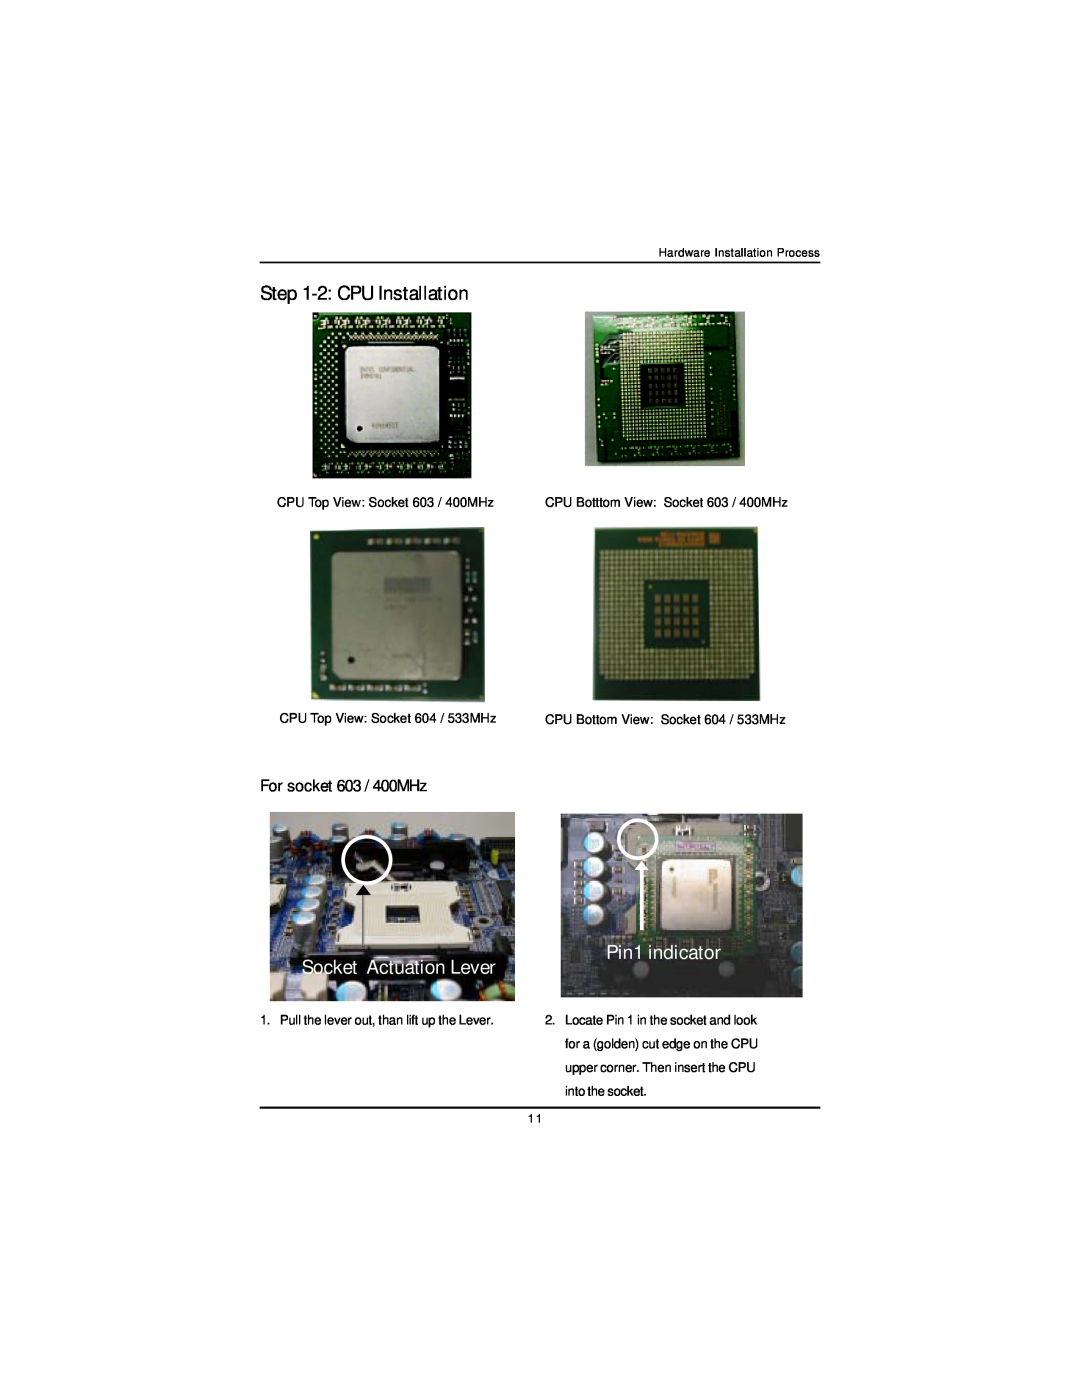 Intel GA-8IPXDR-E user manual 2 CPU Installation, Socket Actuation Lever, Pin1 indicator, For socket 603 / 400MHz 